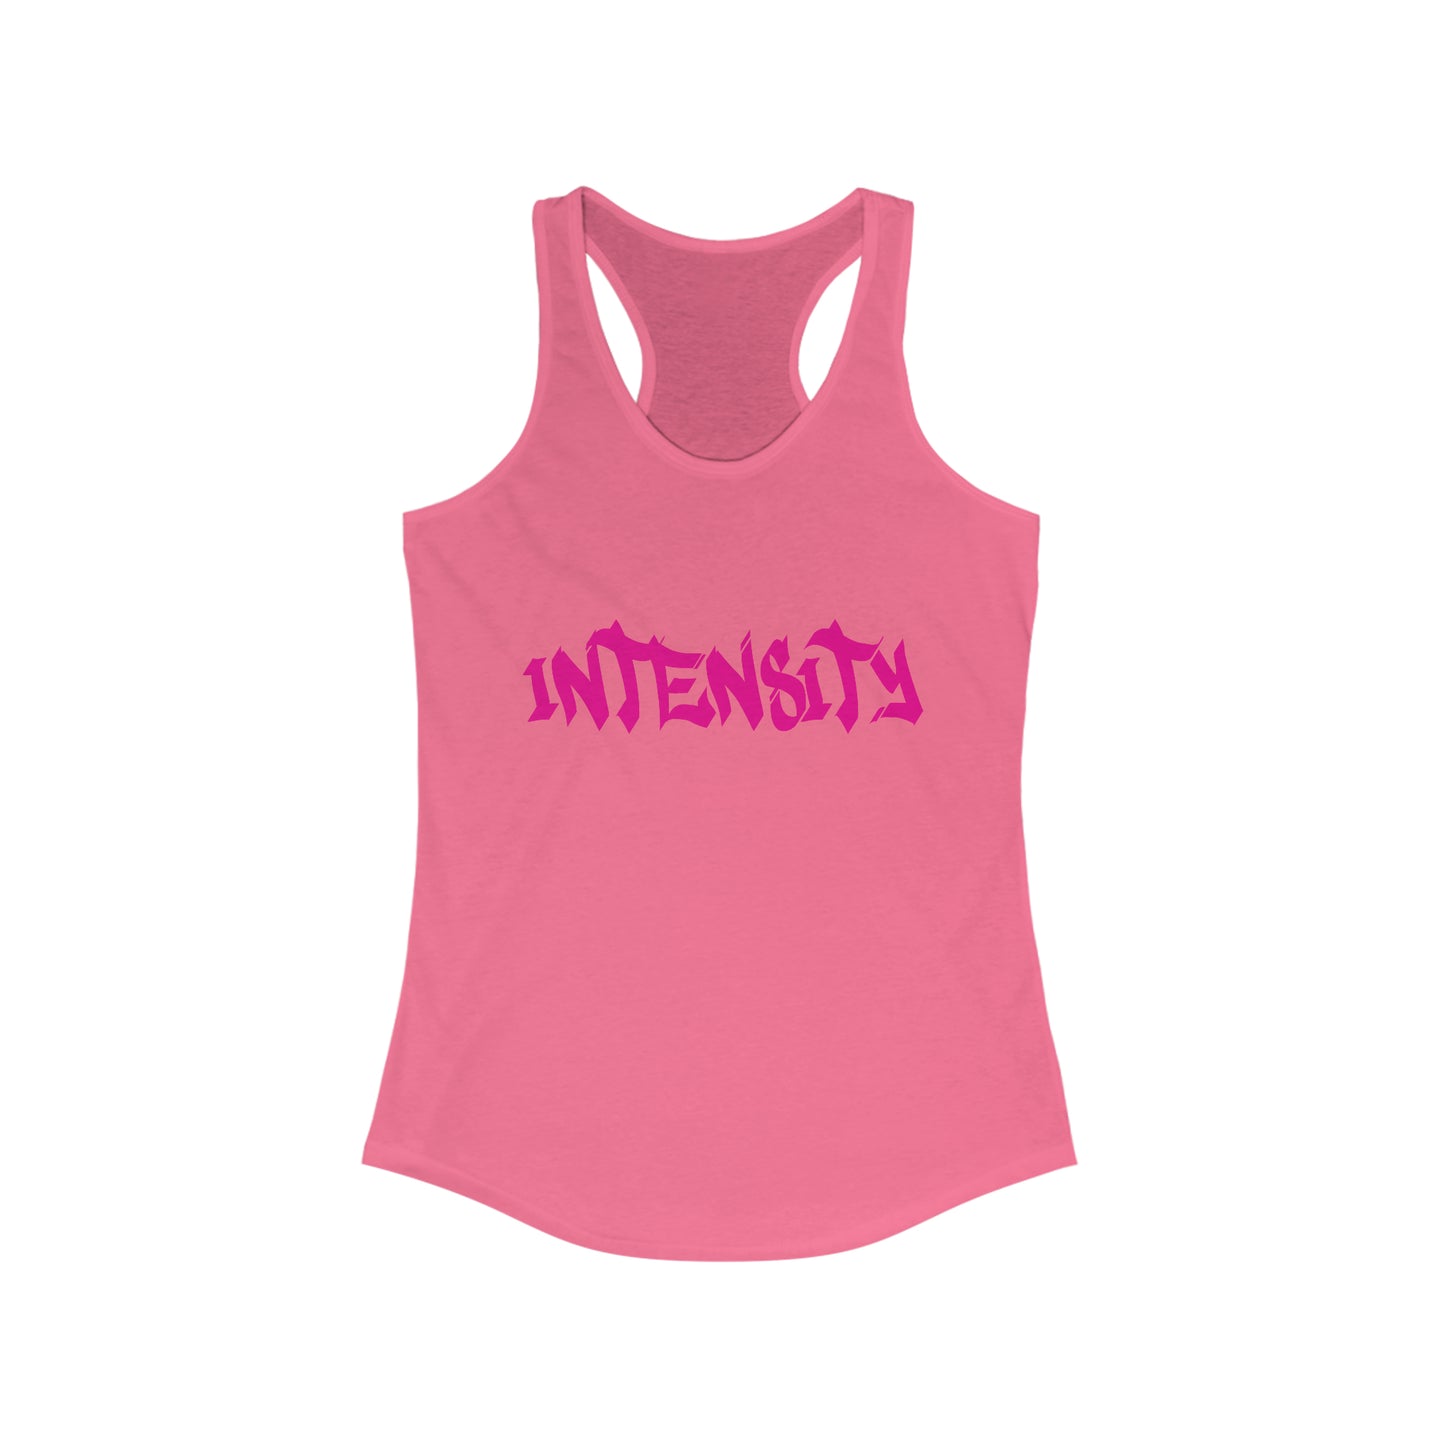 Women's "INTENSITY" Women's Tank Top Hot Pink